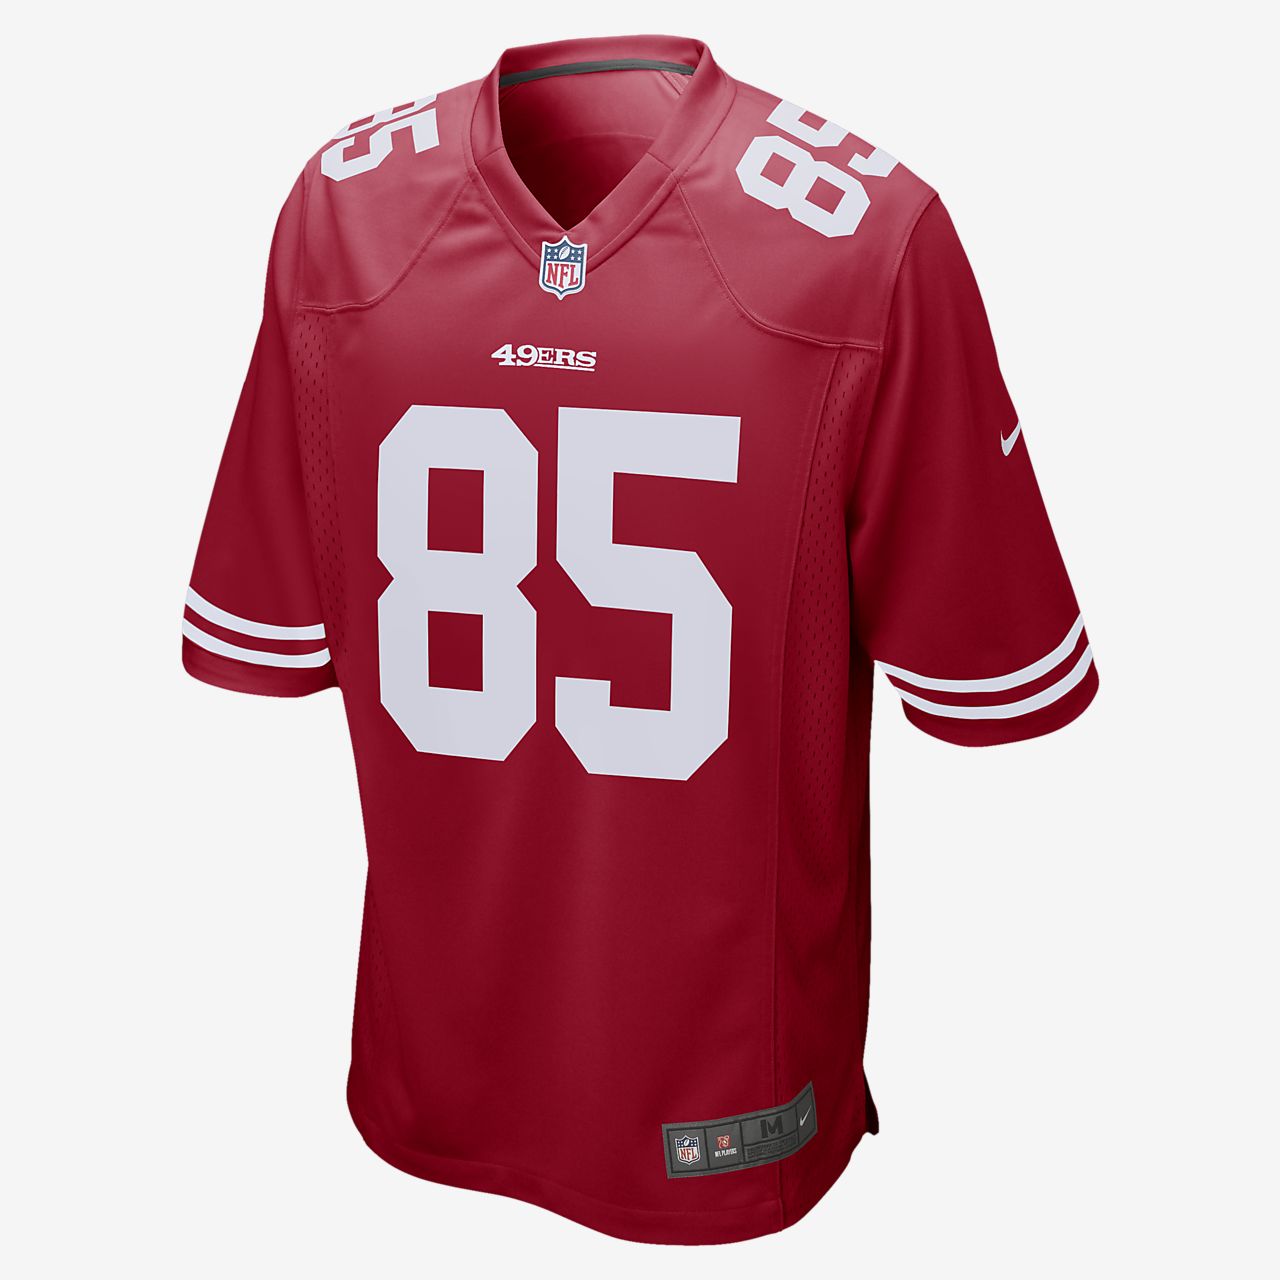 buy 49ers jersey cheap